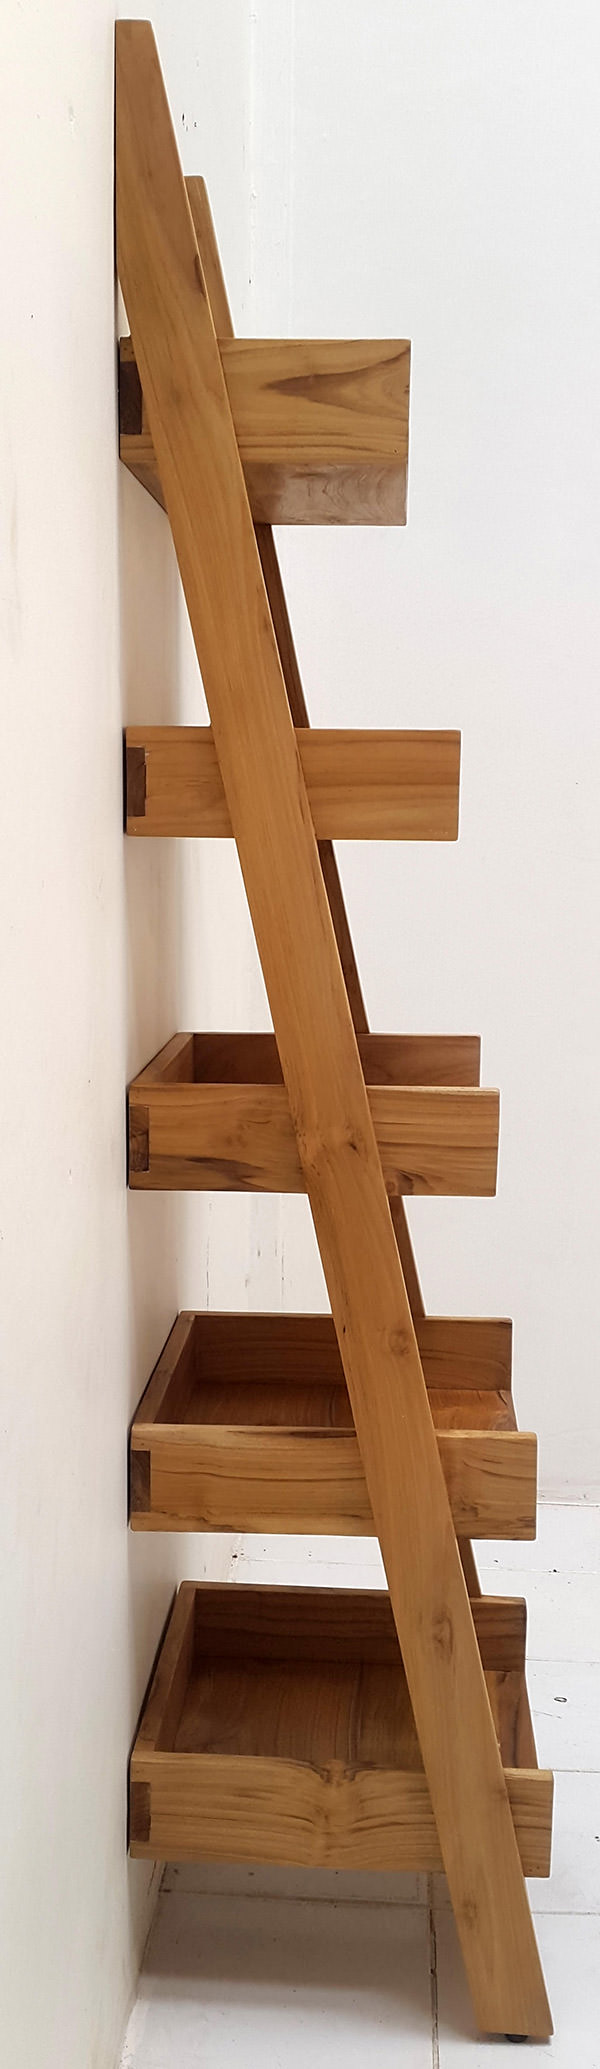 Teak wooden ladder for books against the wall